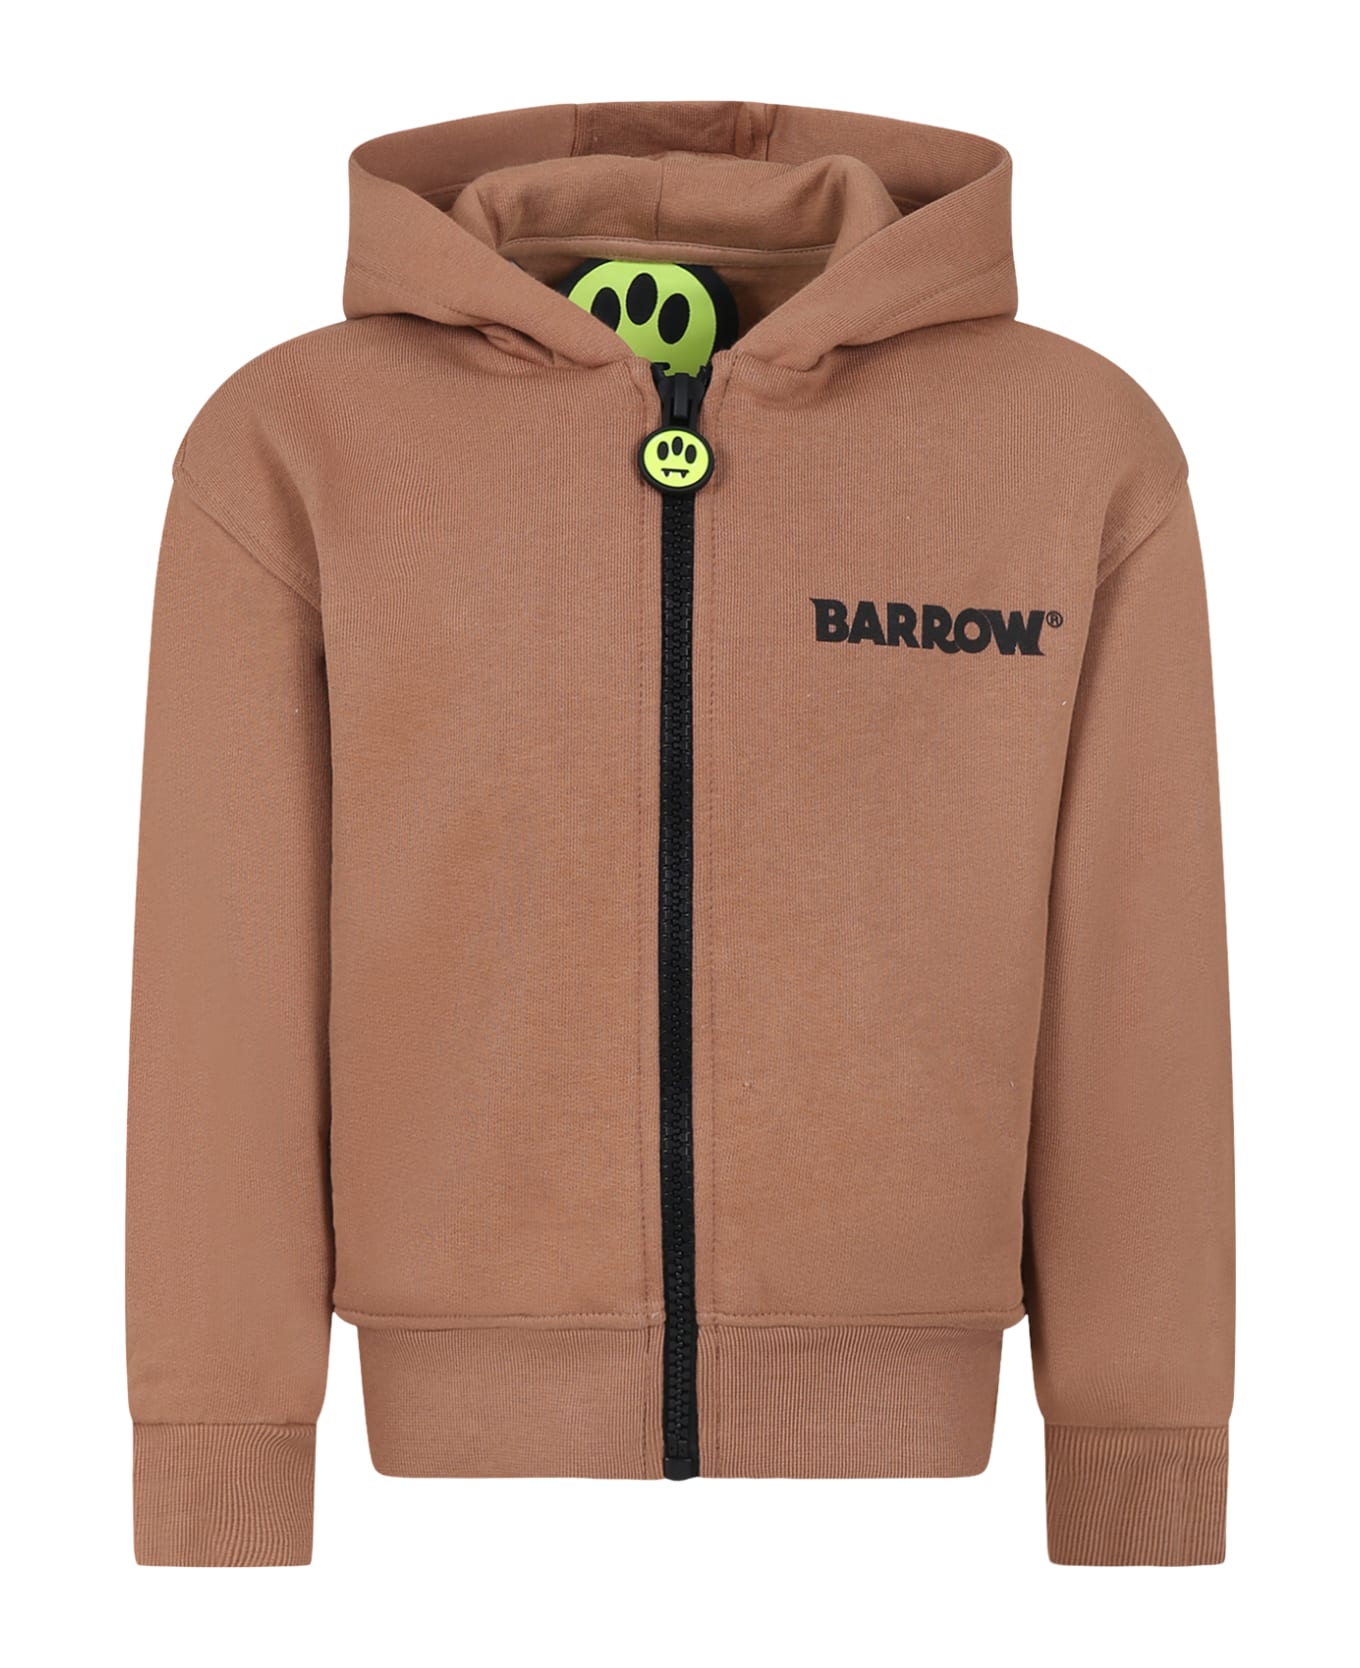 Barrow Beige Sweatshirt For Kids With Logo And Smiley - Beige